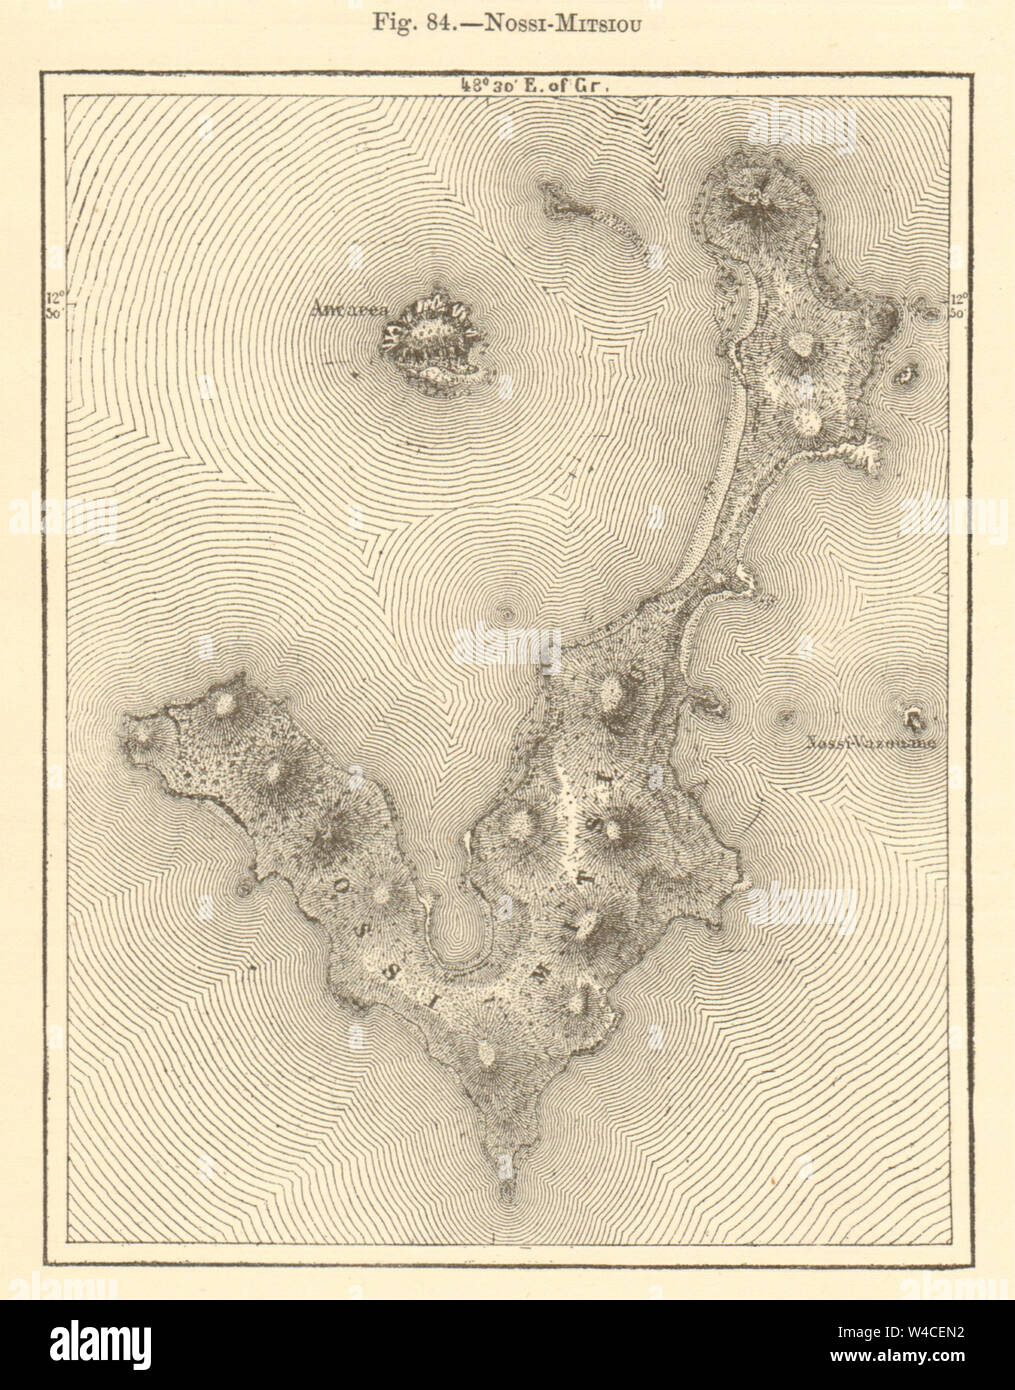 Nossi-Mitsiou. Madagaskar. Nosi Mitsio. Kartenskizze 1886 alte antike Grafik Stockfoto